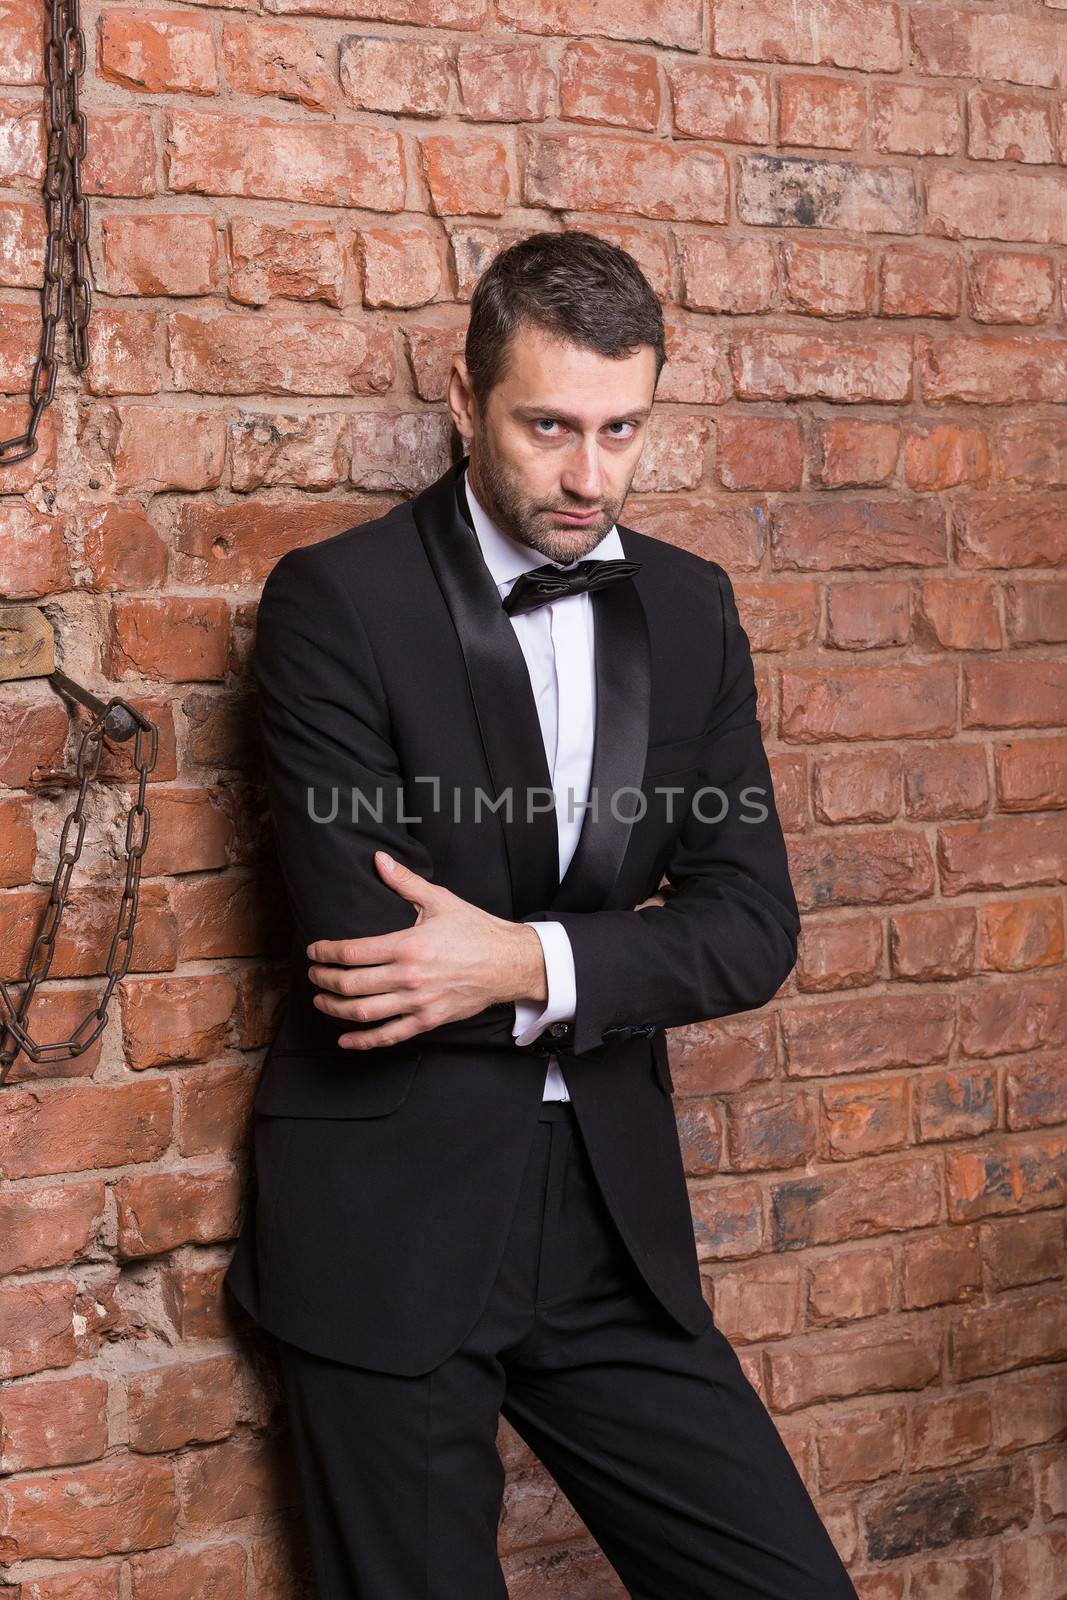 Elegant macho man in a bow tie by Discovod